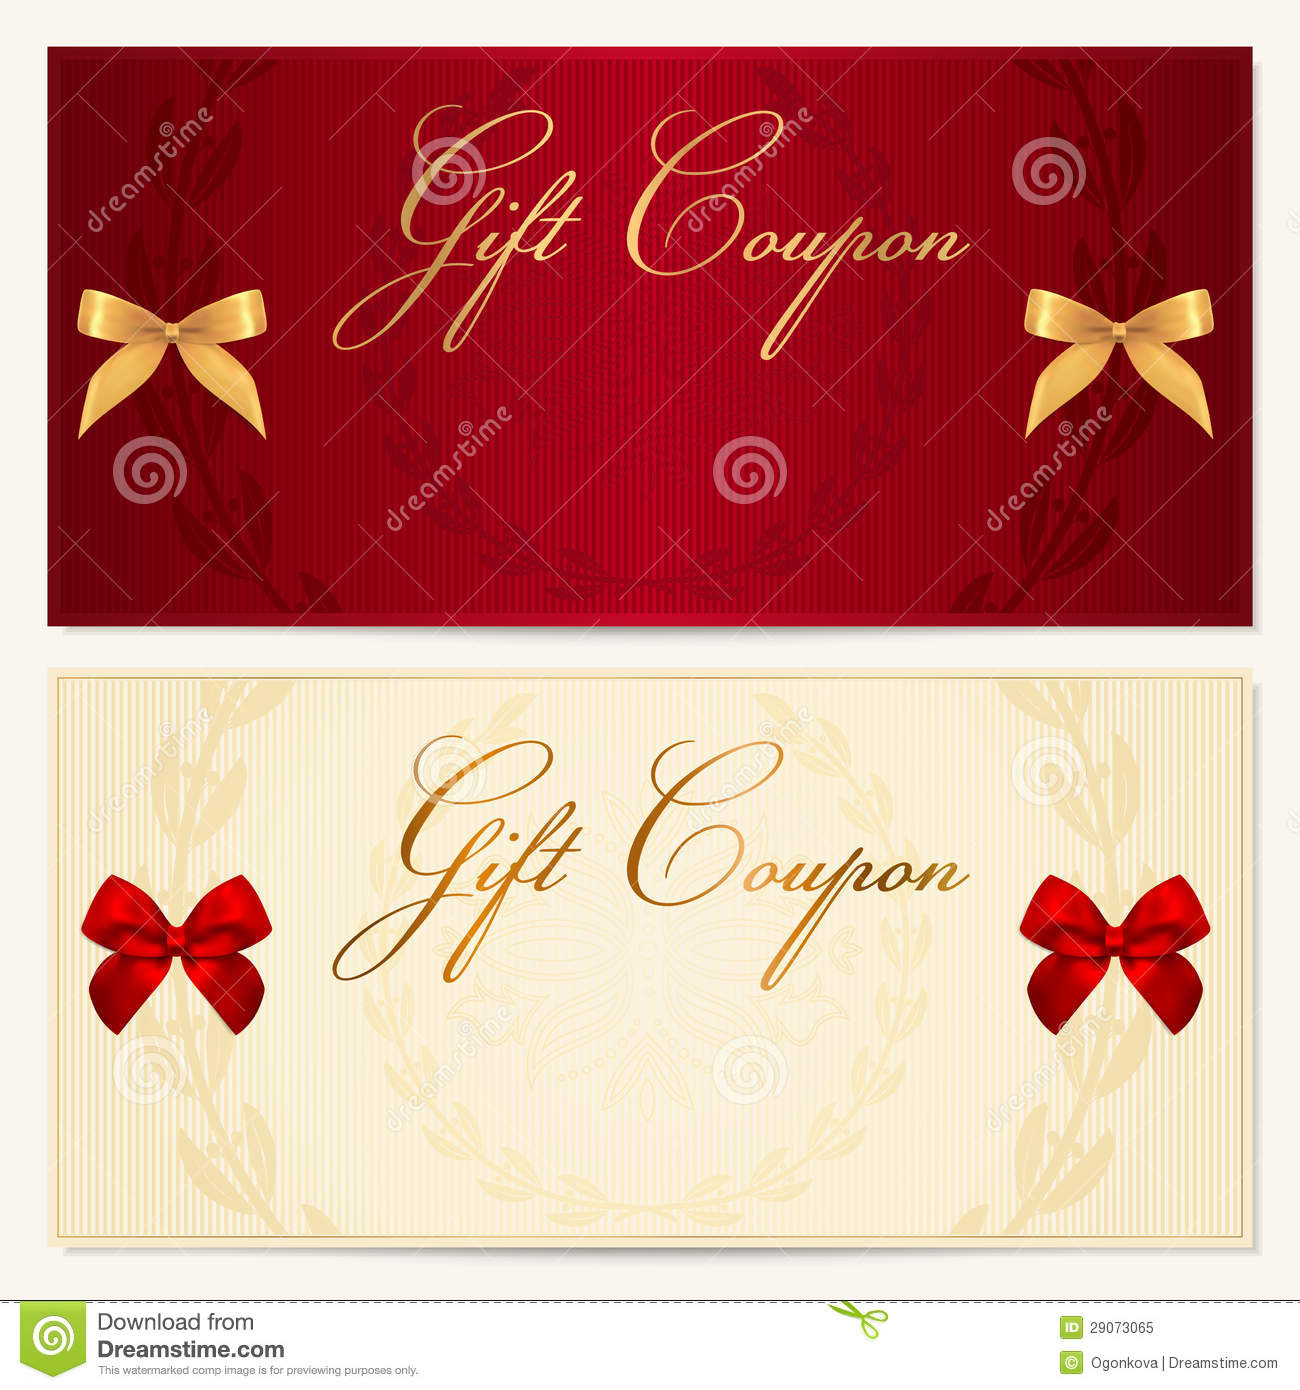 Printable Christmas Gift Certificates Image Collections - Free - Free Printable Christmas Gift Voucher Templates